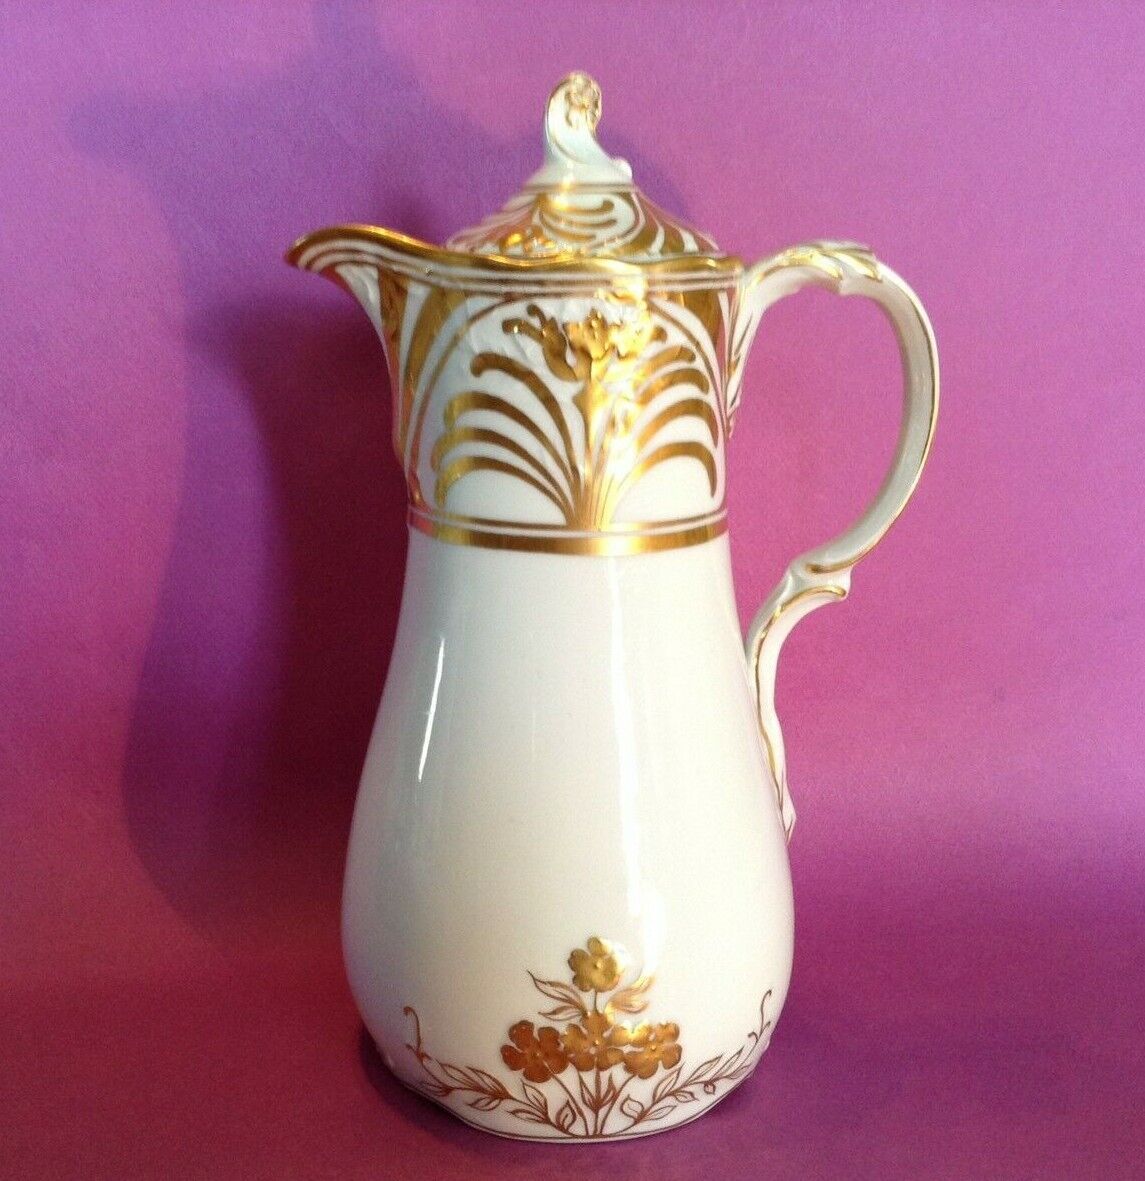 Ahrenfeldt Saxe Chocolate Pot Teapot - White With Raised Gold Accents - Austria